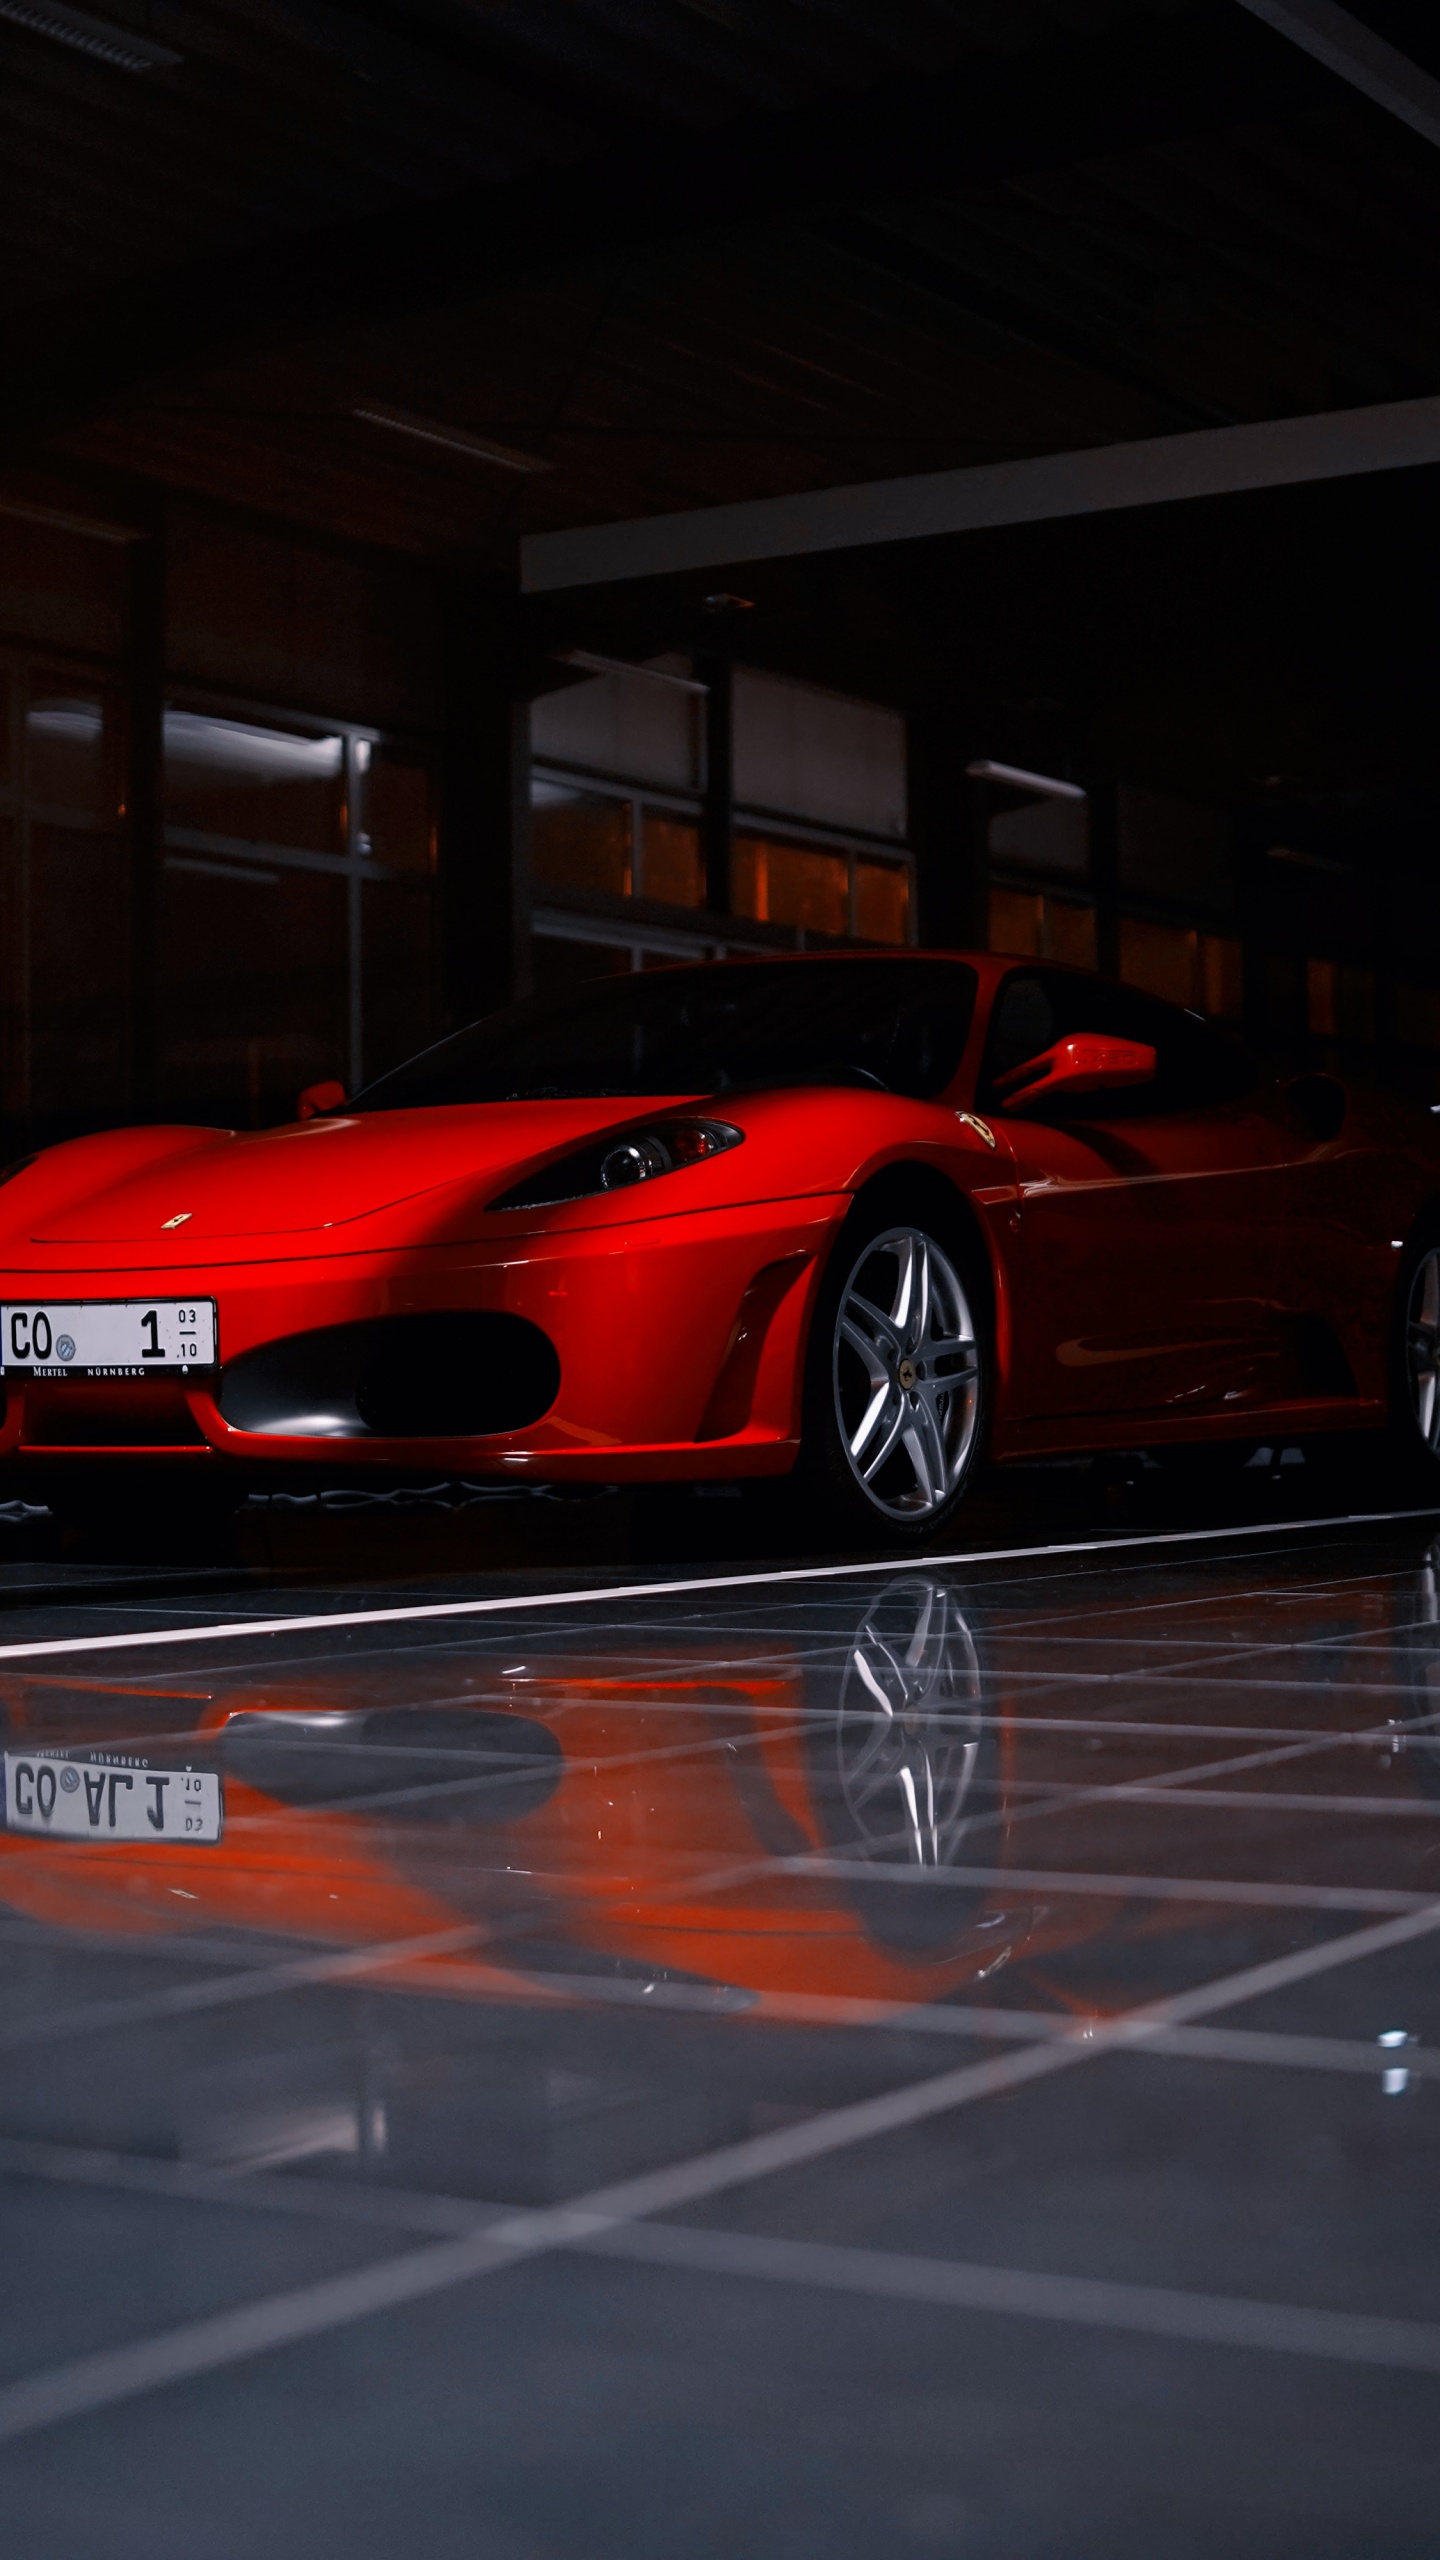 Red Ferrari 458 Italia Parked on Parking Lot. Wallpaper in 1440x2560 Resolution